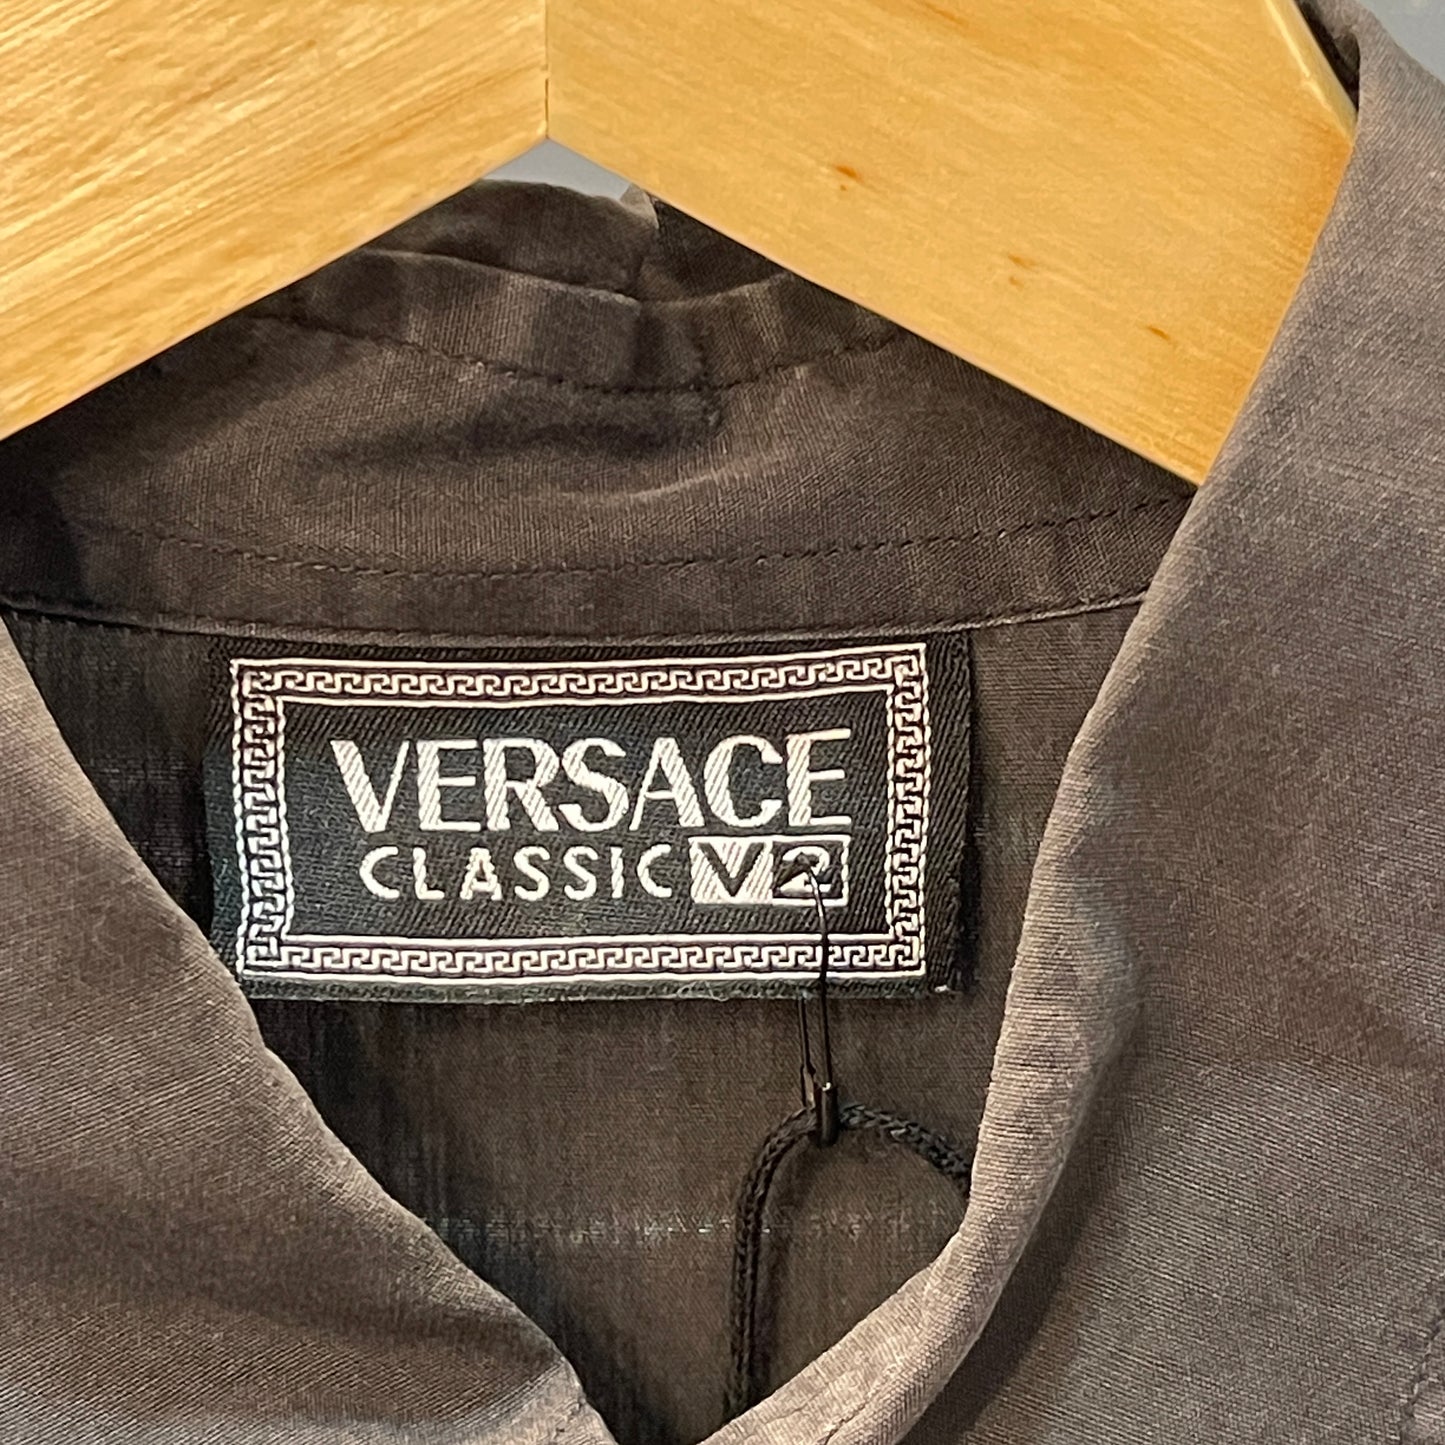 Vintage Versace Classic V2 black Longsleeves Shirt